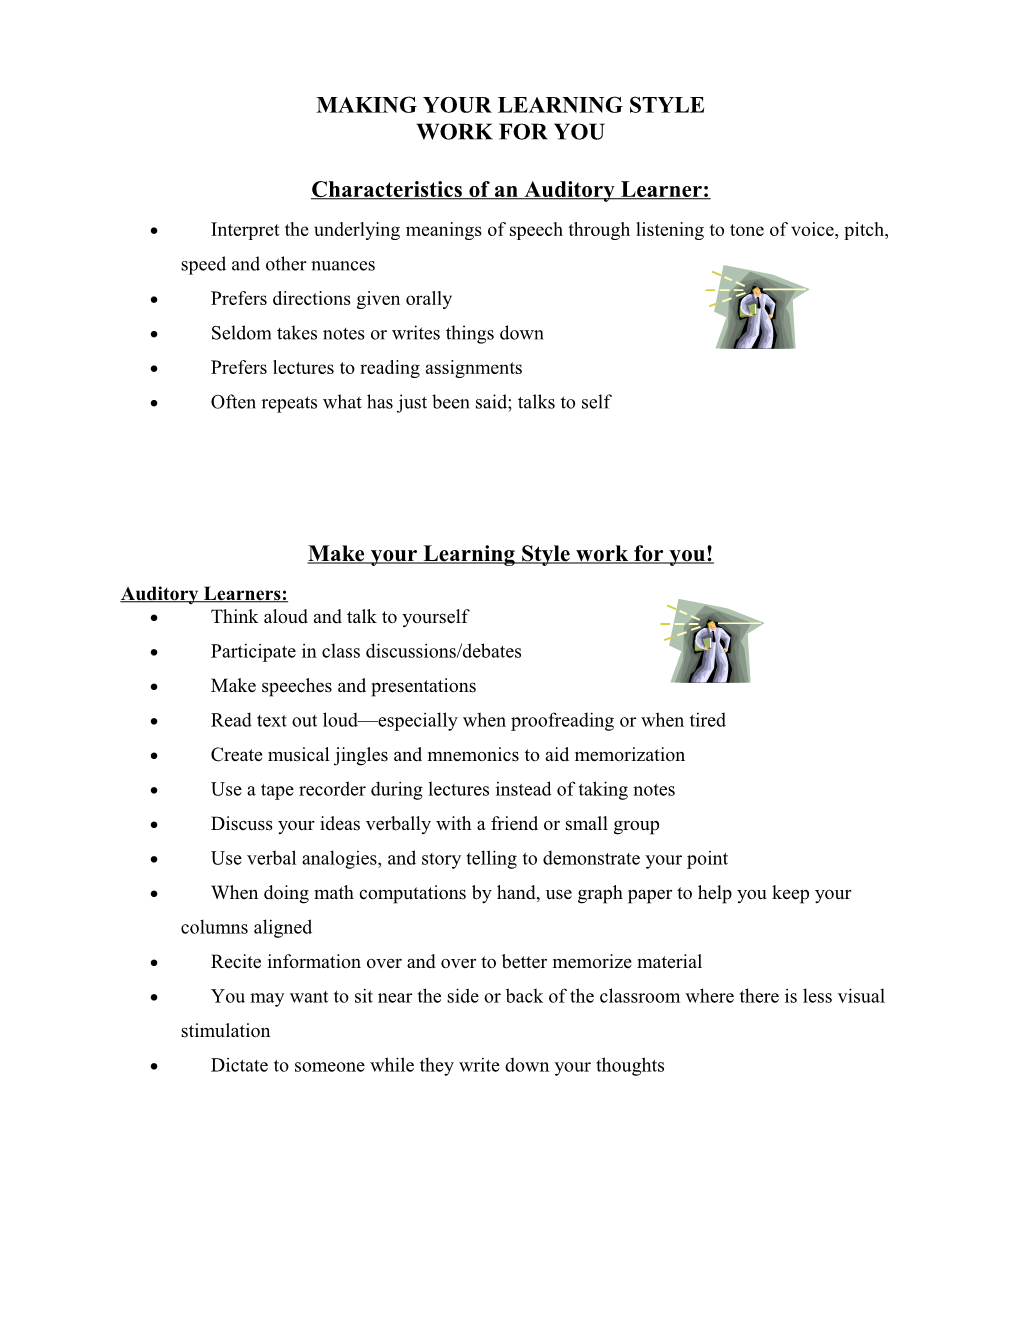 Characteristics of a Visual Learner